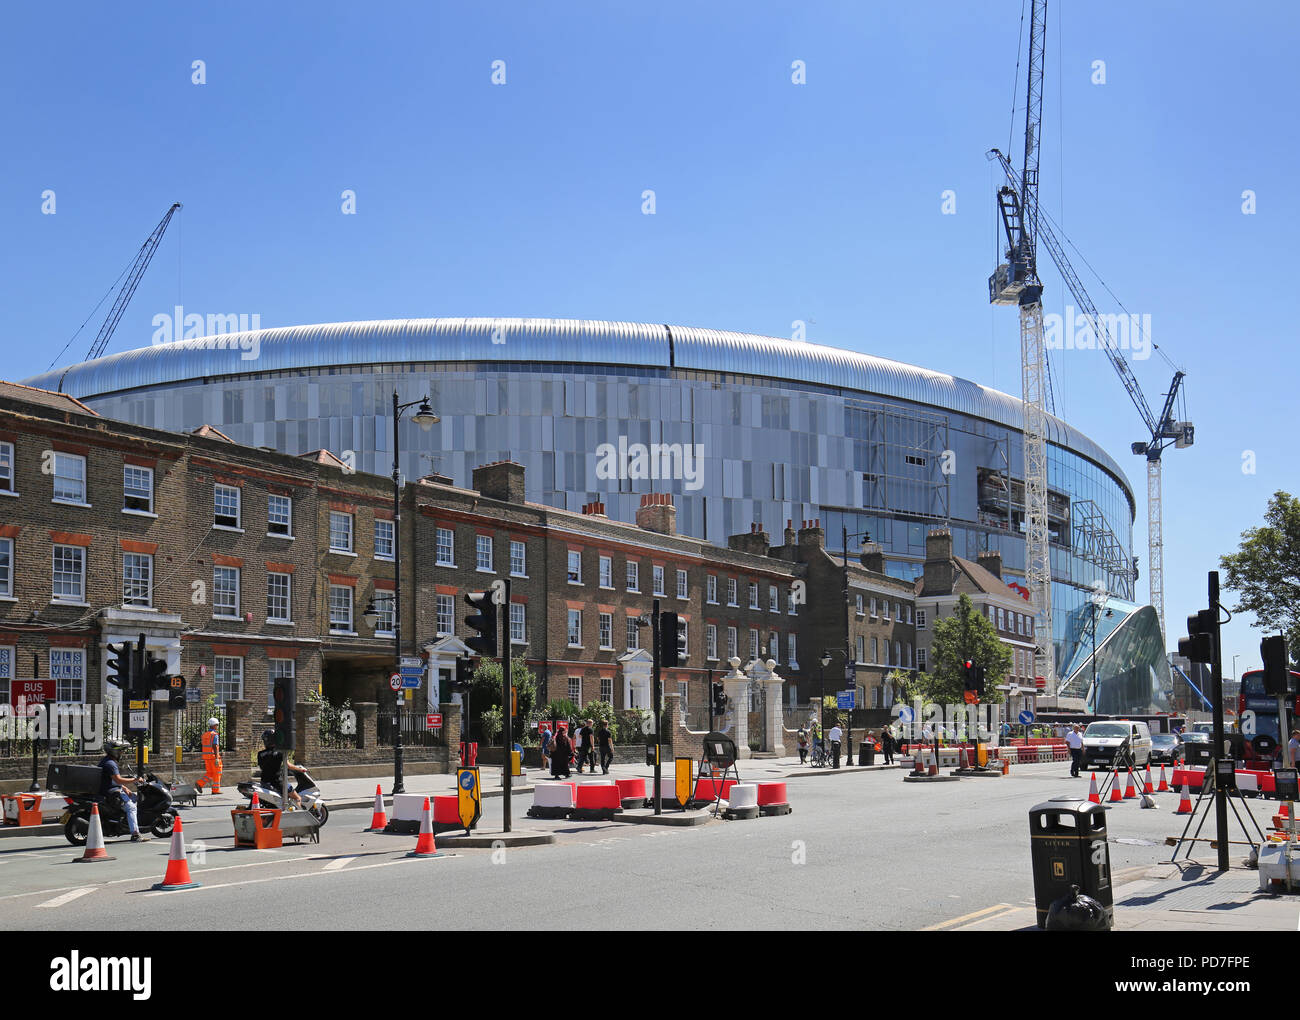 England premier league team Tottenham Hotspur's new stadium dwarfs local houses at White Hart Lane, London. Nearing completion (Aug 2018). Stock Photo